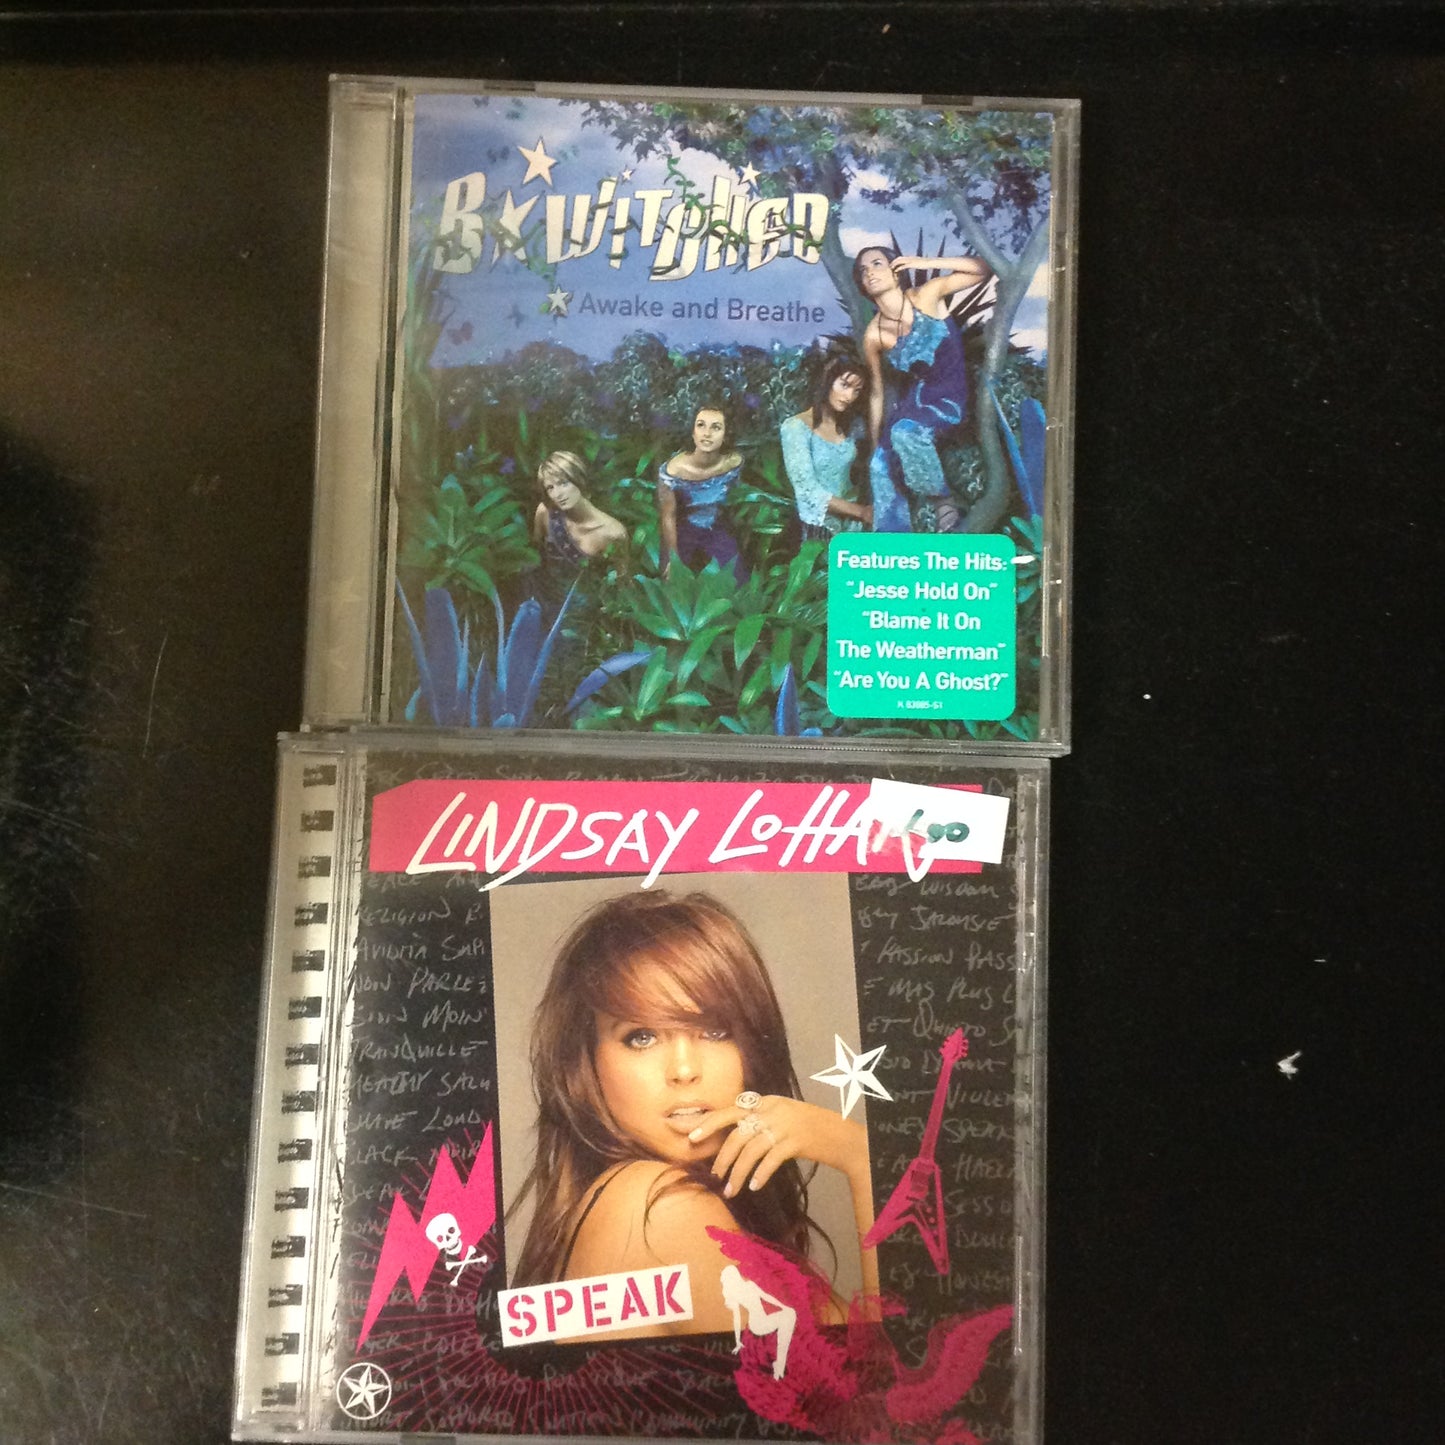 2 Disc SET BARGAIN CDs Lindsay Lohan B*Witched